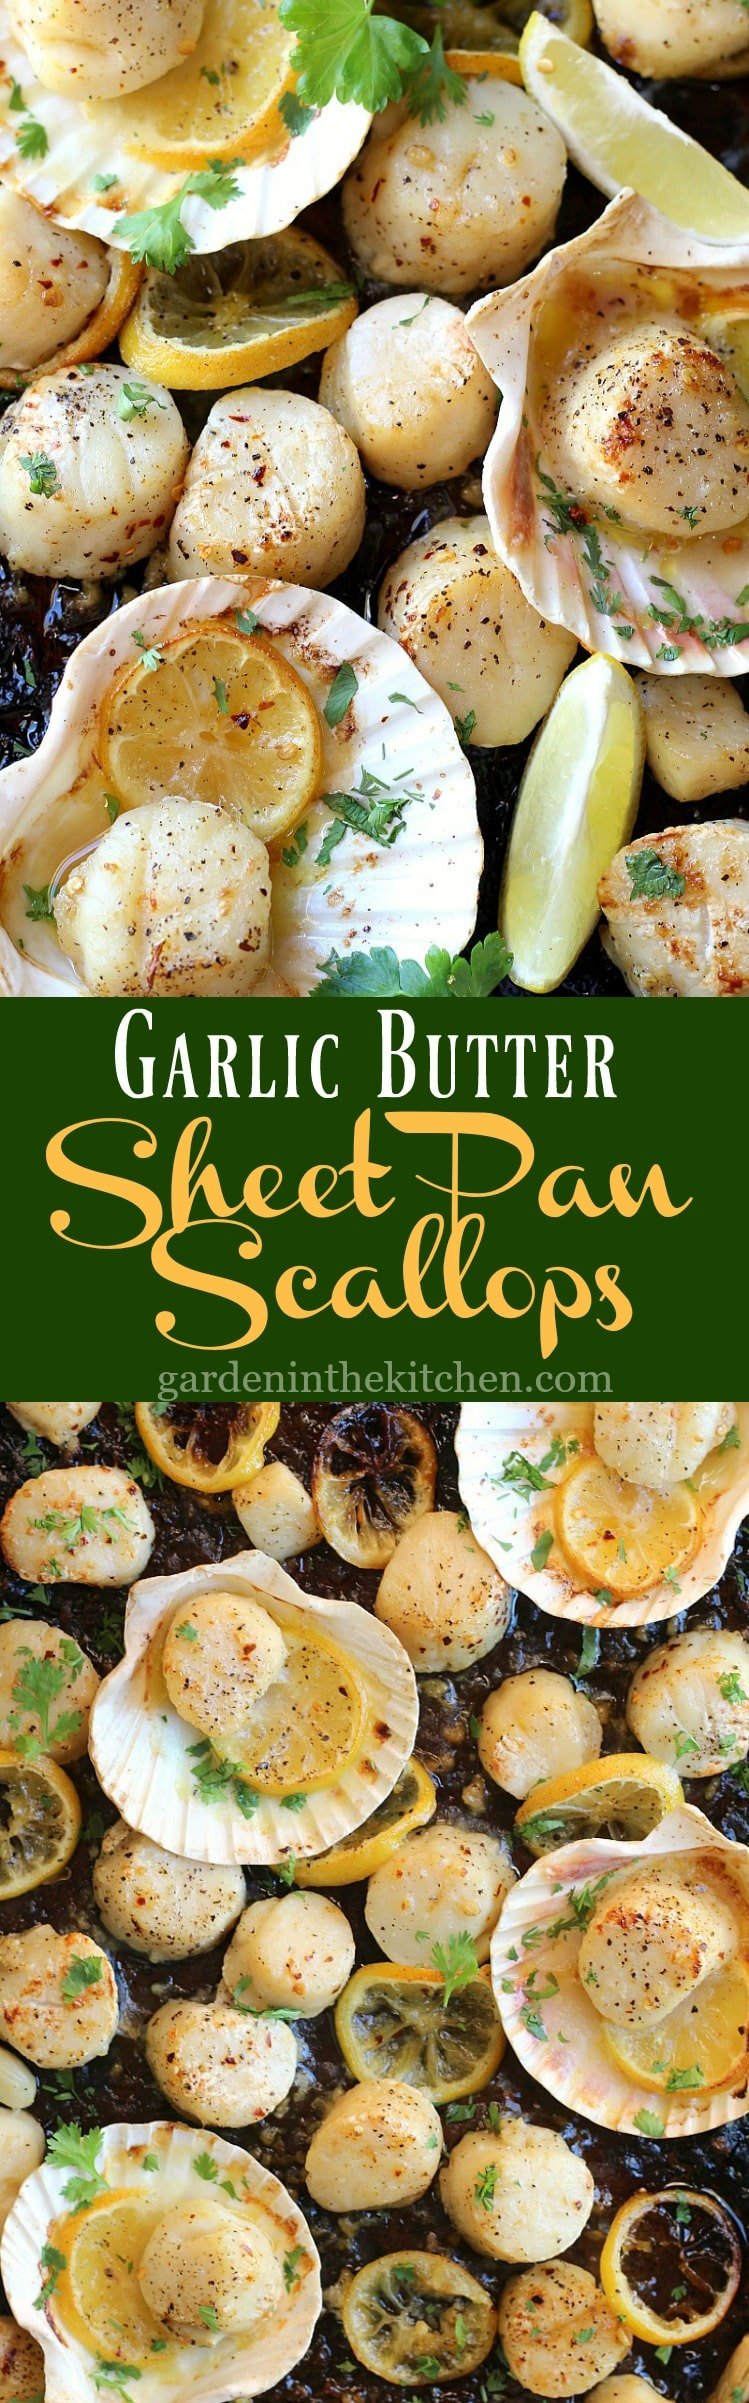 Sheet Pan Garlic Butter Scallops 